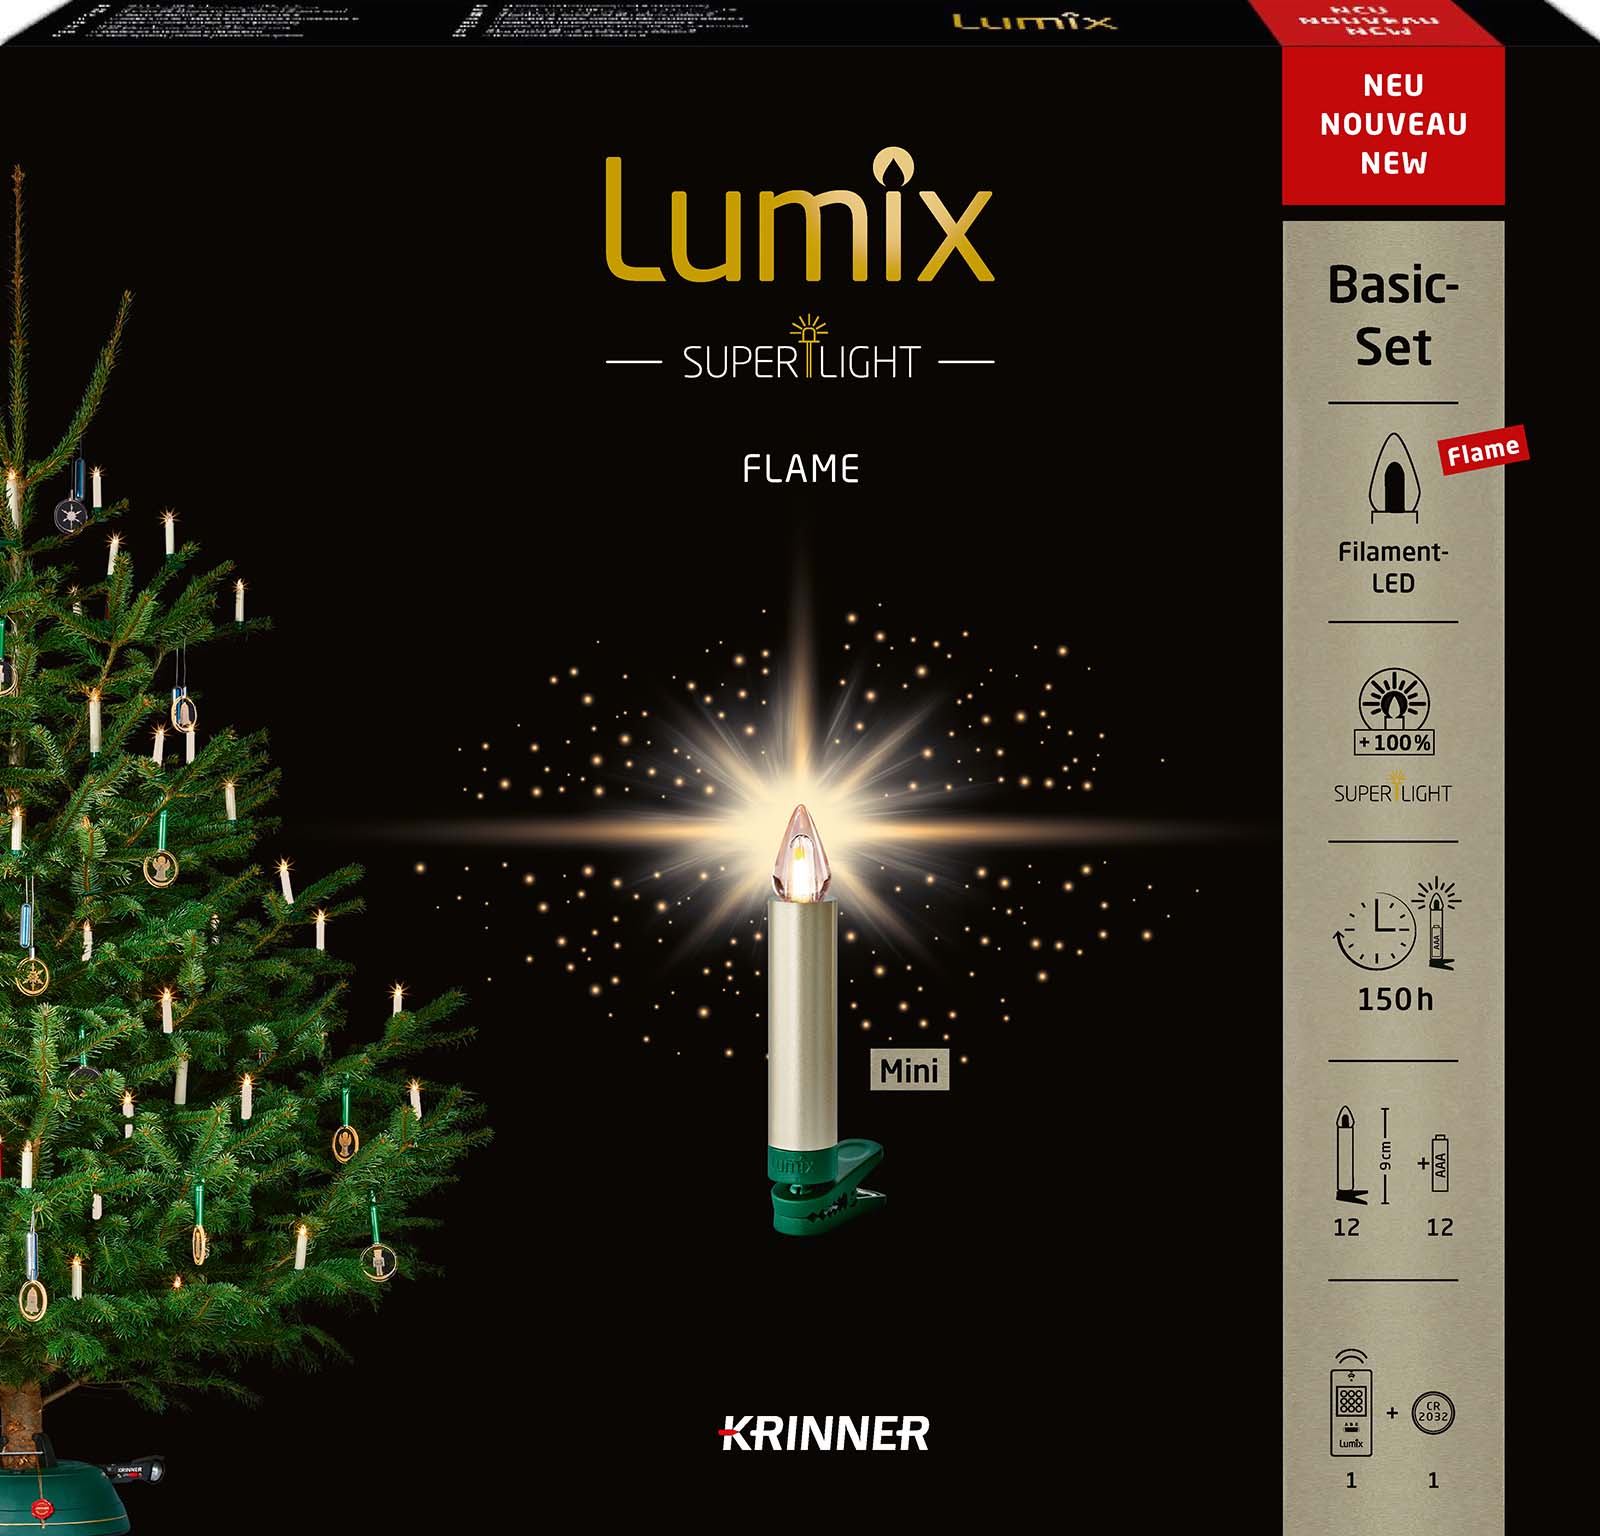 LUMIX SuperLight Flame Mini Metallic Cashmere Basis